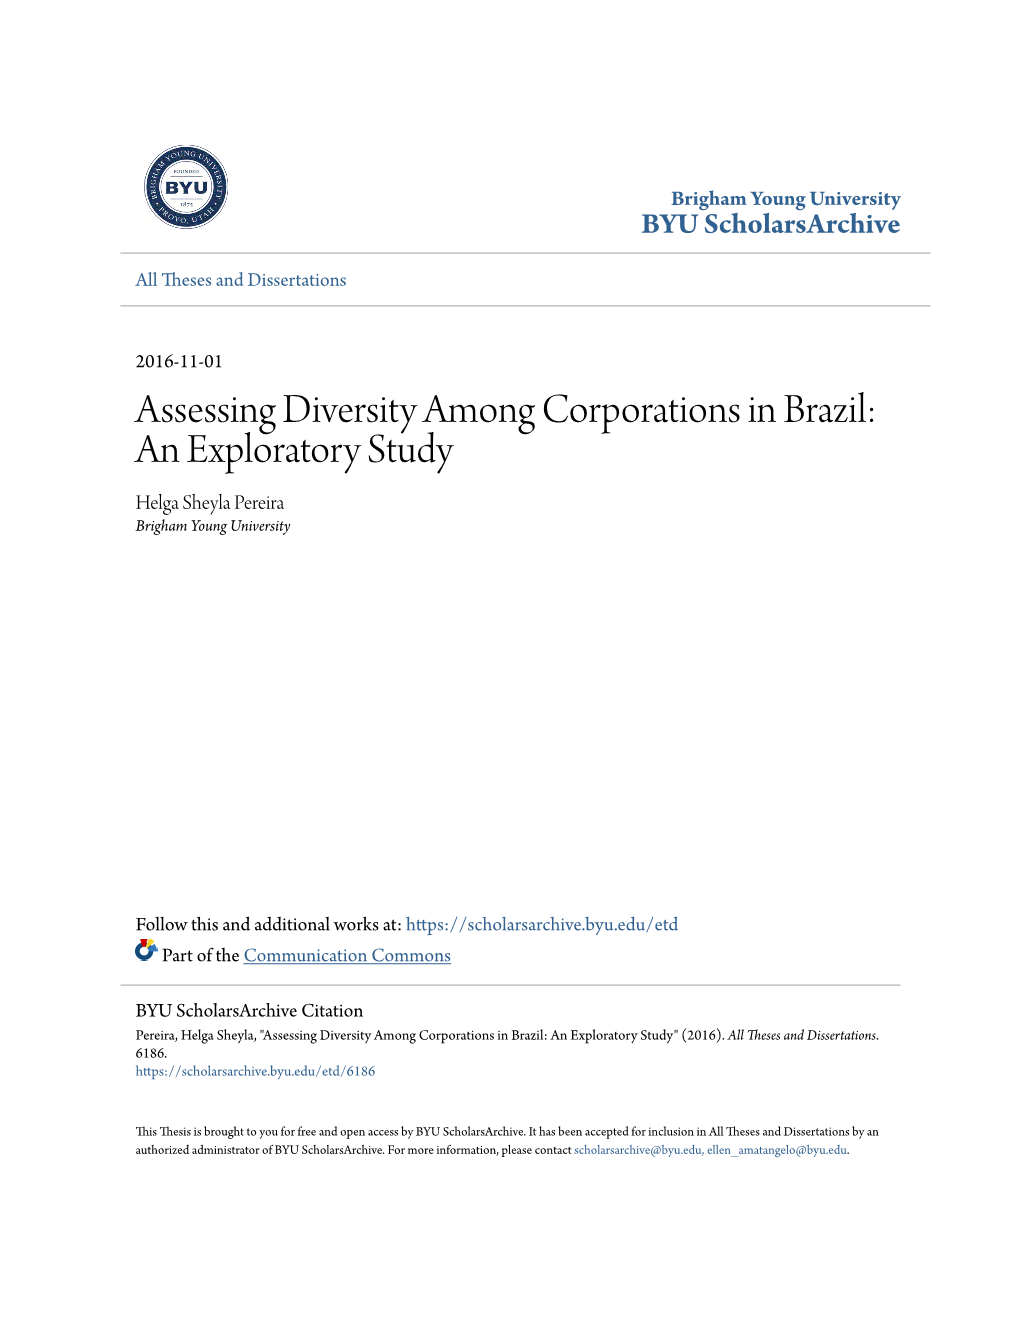 Assessing Diversity Among Corporations in Brazil: an Exploratory Study Helga Sheyla Pereira Brigham Young University